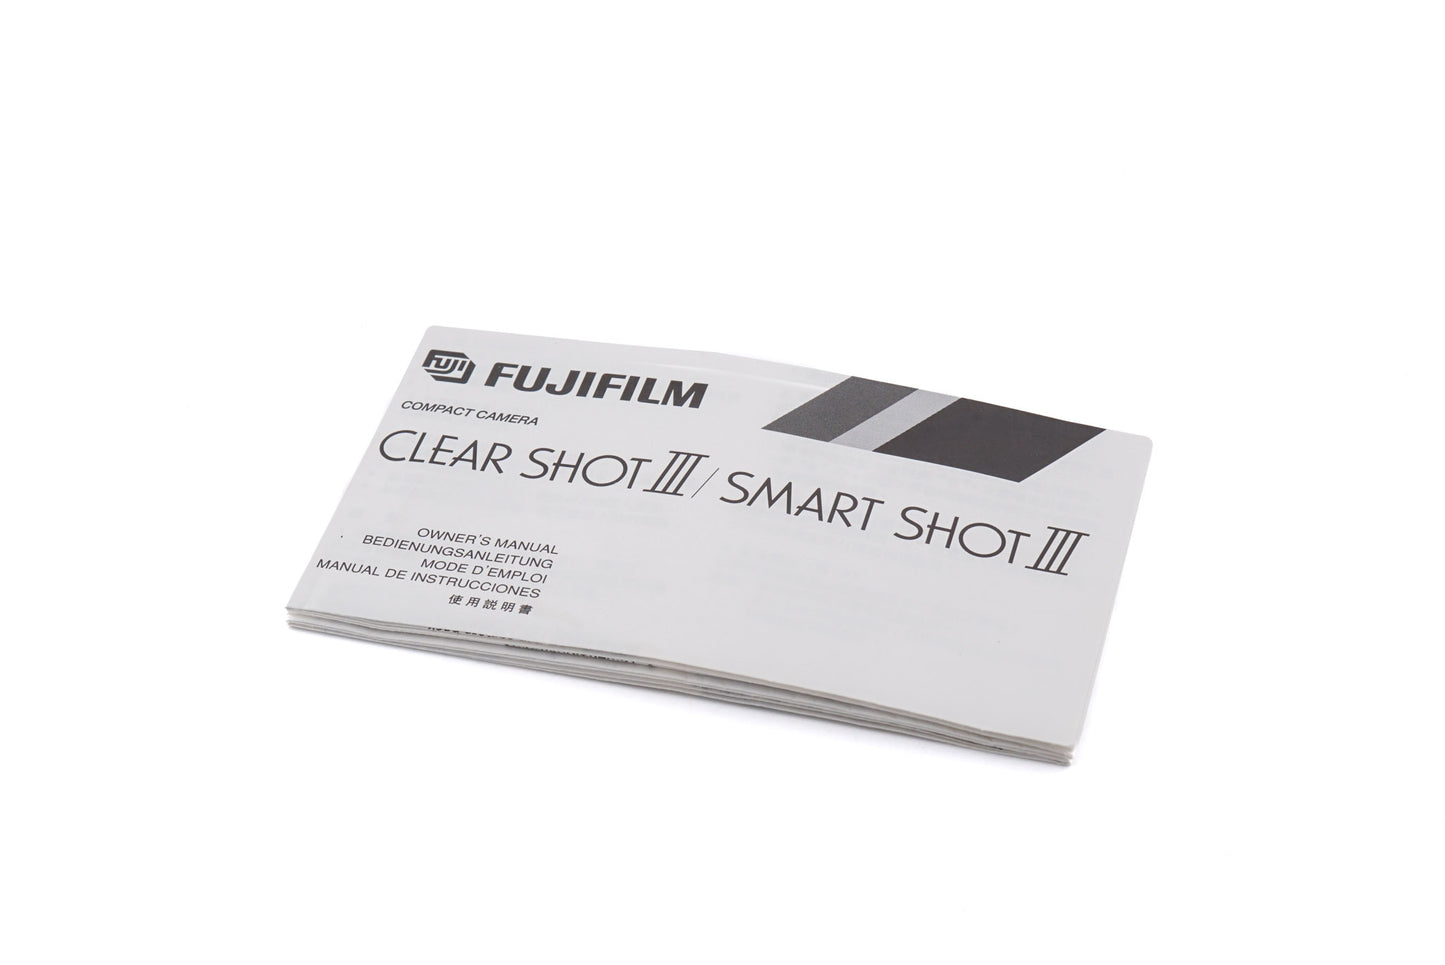 Fujifilm Clear Shot III